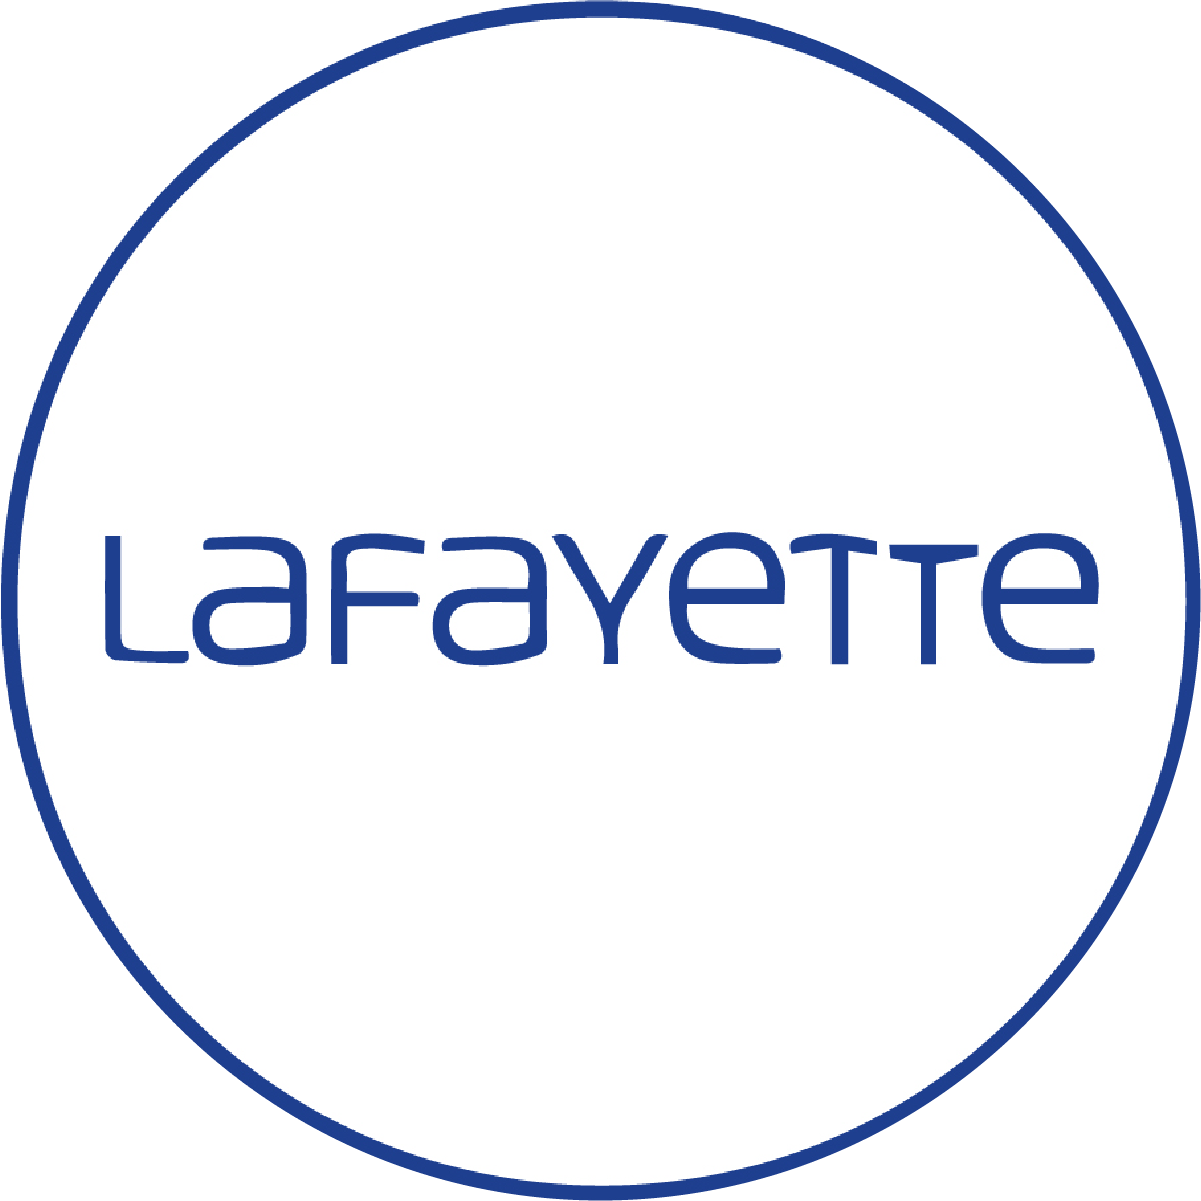 LAFAYETTE